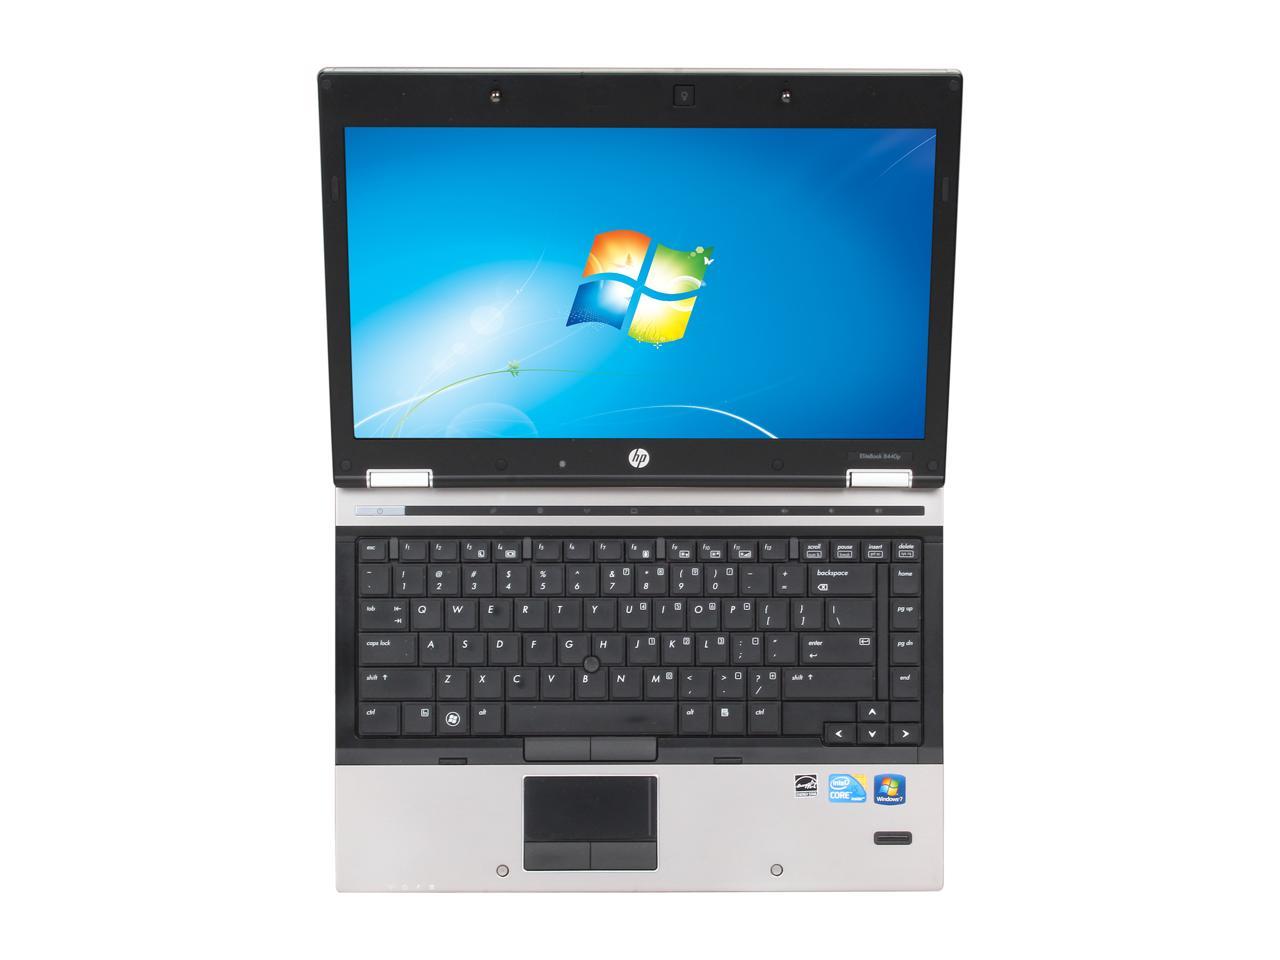 Refurbished Hp Laptop Elitebook 8440p Intel Core I5 1st Gen 540m 253 Ghz 4 Gb Memory 160 Gb 9457